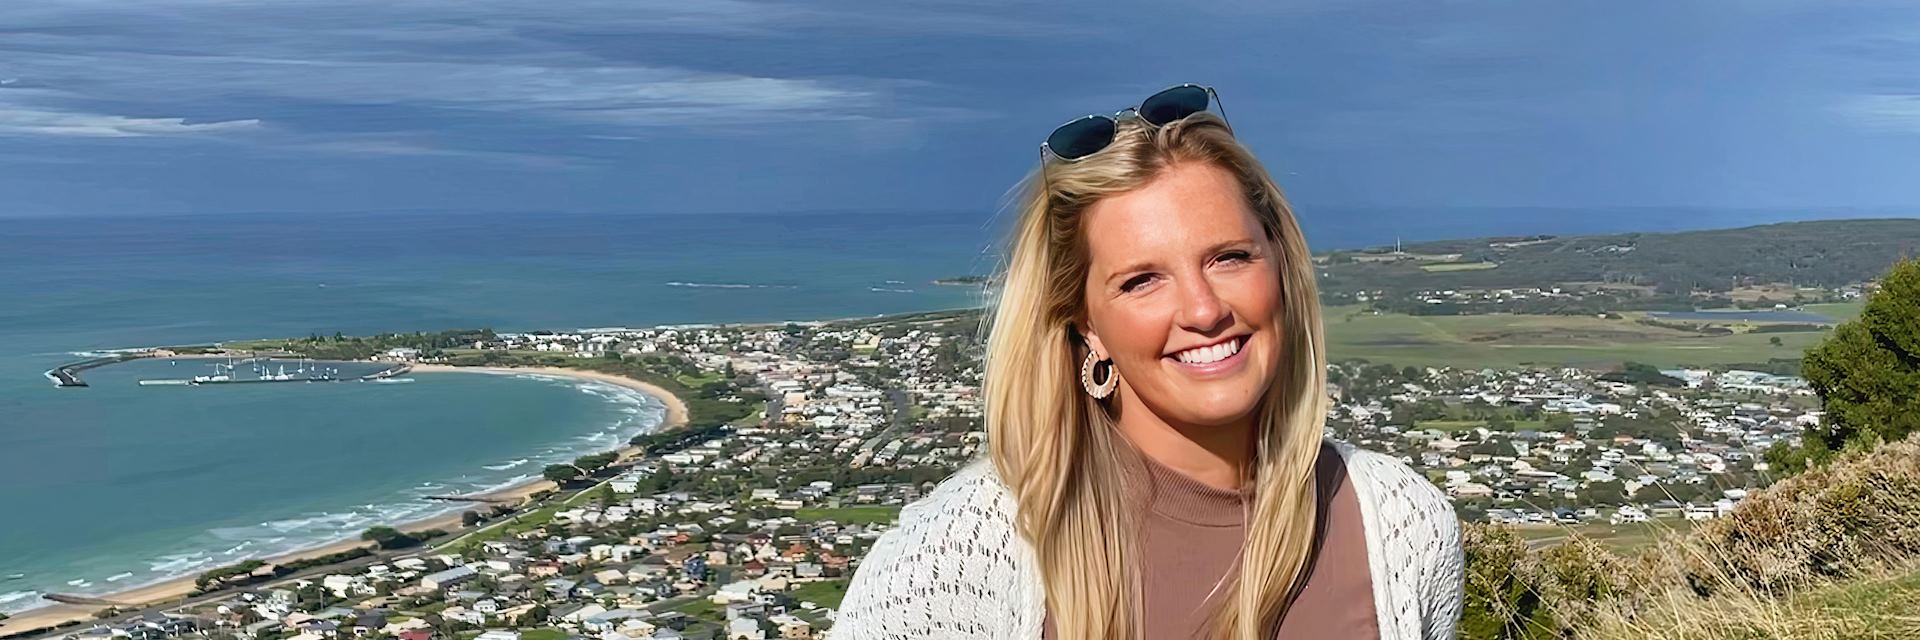 Haley at Apollo bay, Australia